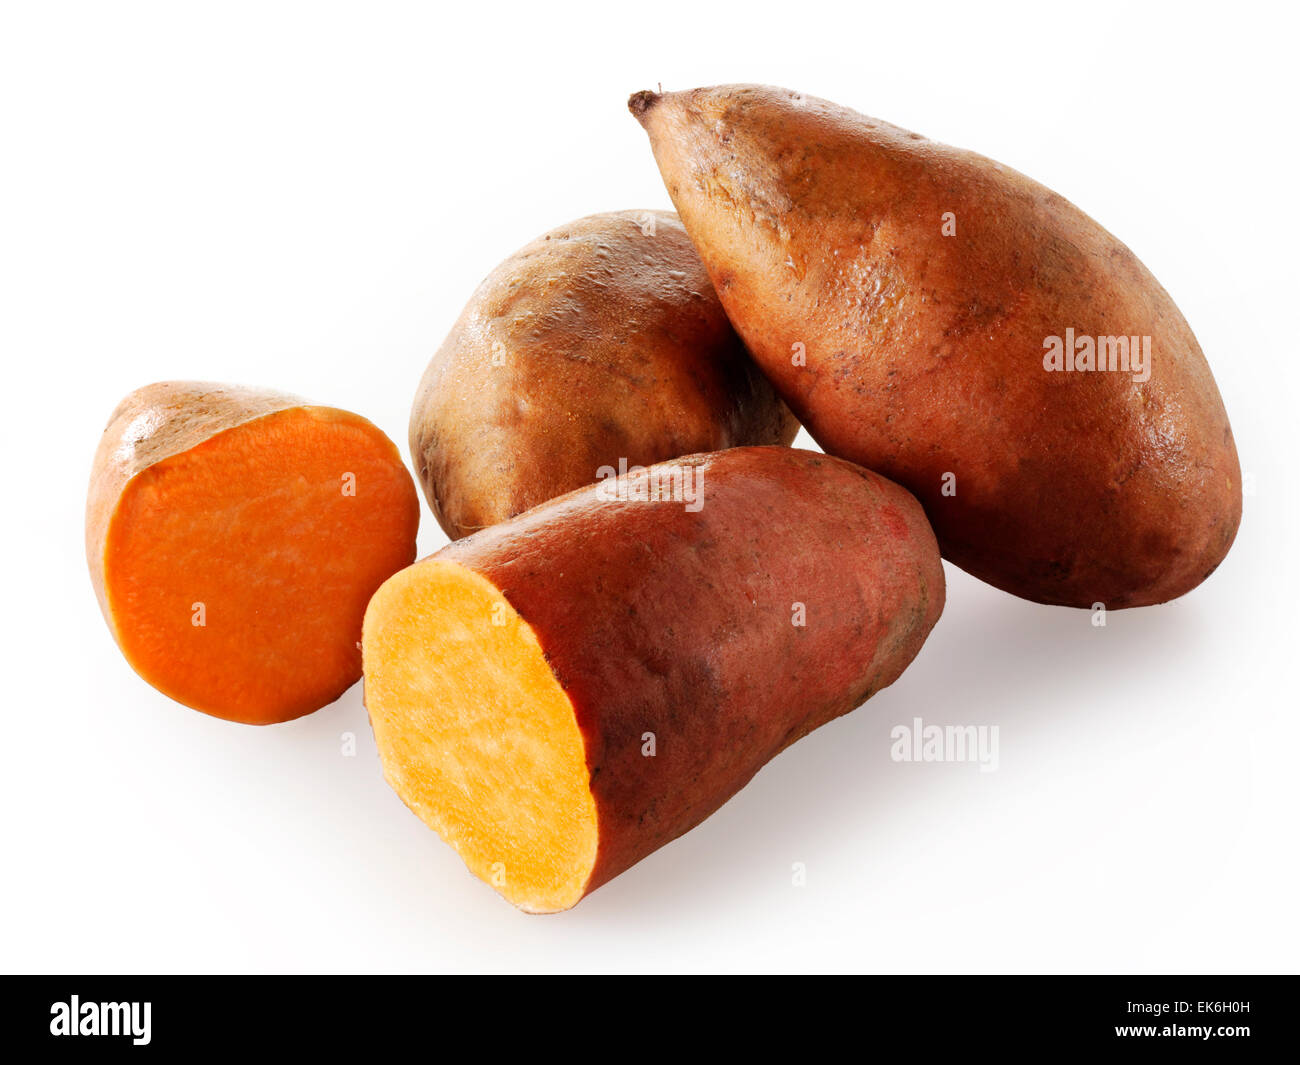 Fresh whole and cut sweet potato or kumara on a white background Stock Photo